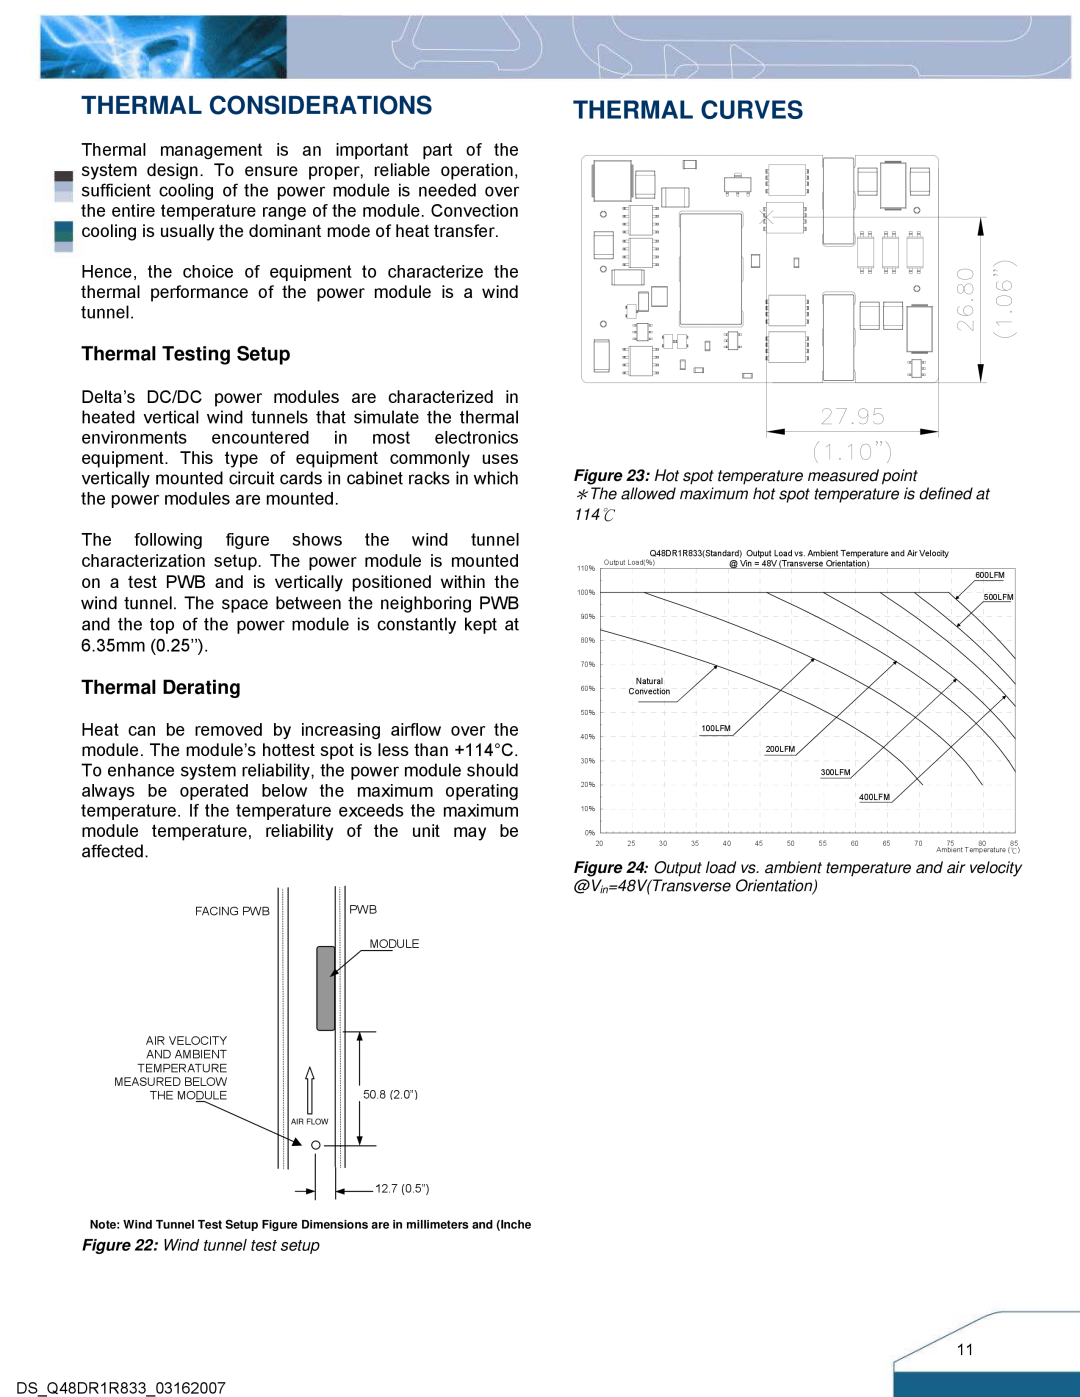 Delta Electronics Series Q48DR manual Thermal Considerations, Thermal Curves, Thermal Testing Setup, Thermal Derating 